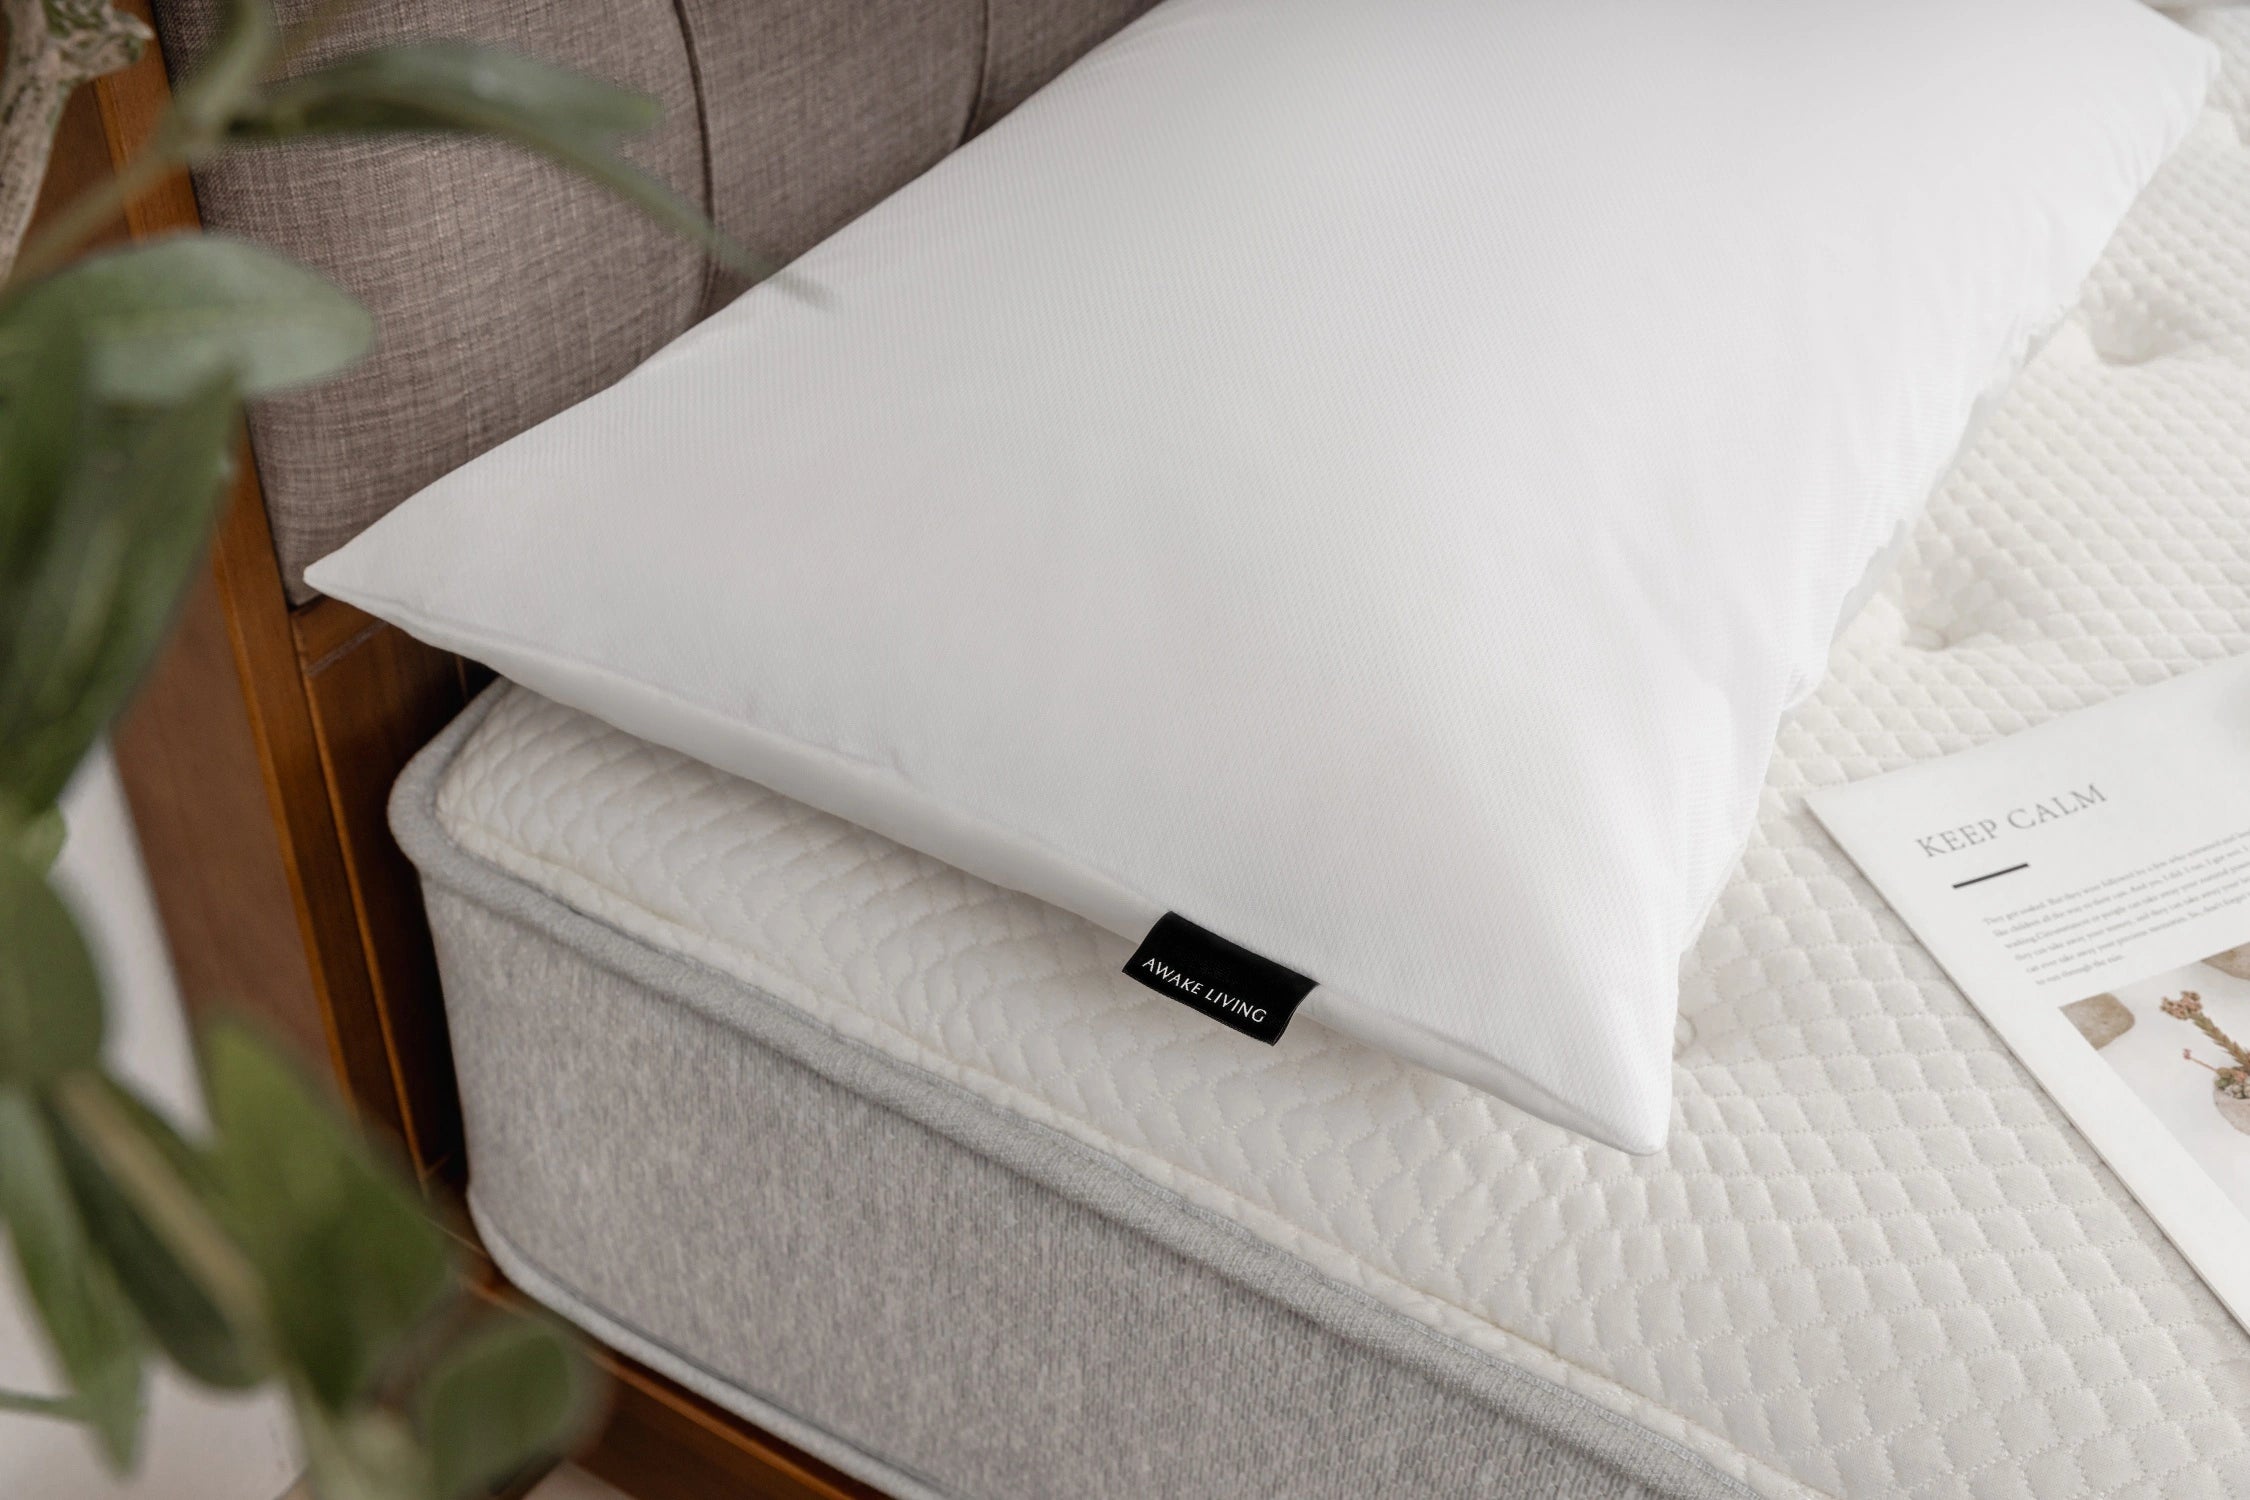 3M 專利超薄透氣防水防蟎枕頭保潔墊情境照 - 2